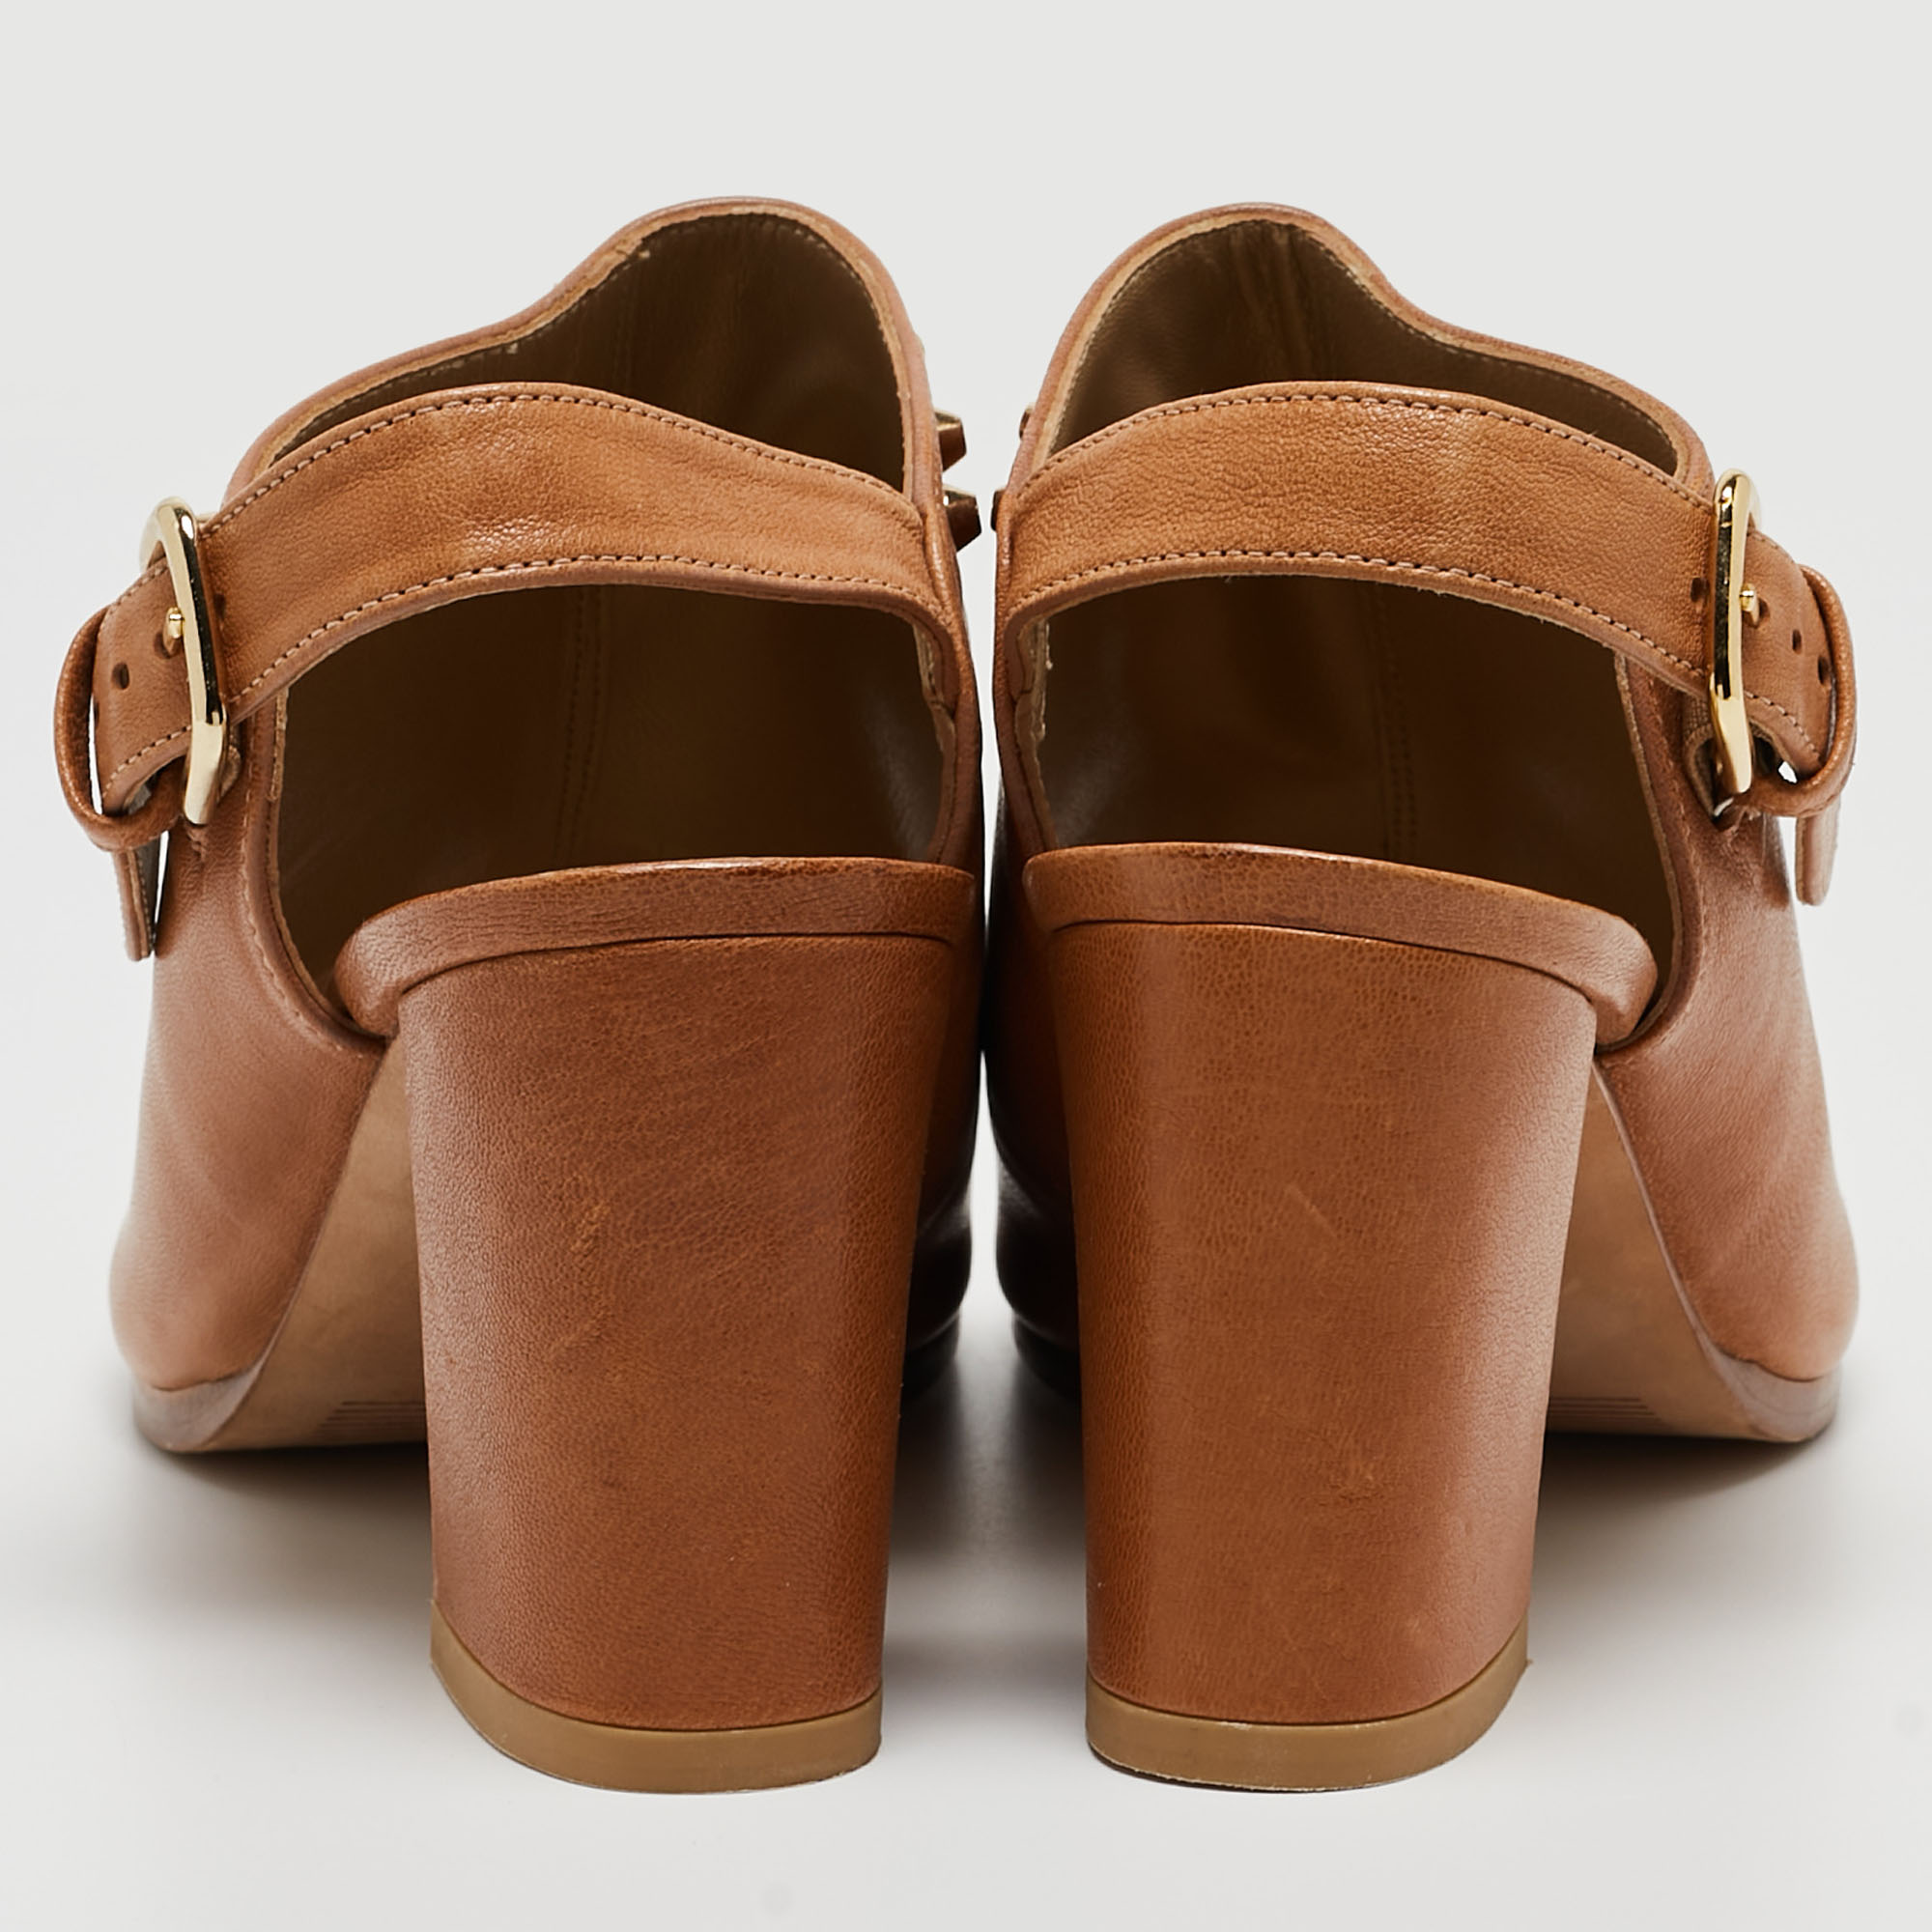 Stuart Weitzman Tan Leather Studded Slingback Sandals Size 36